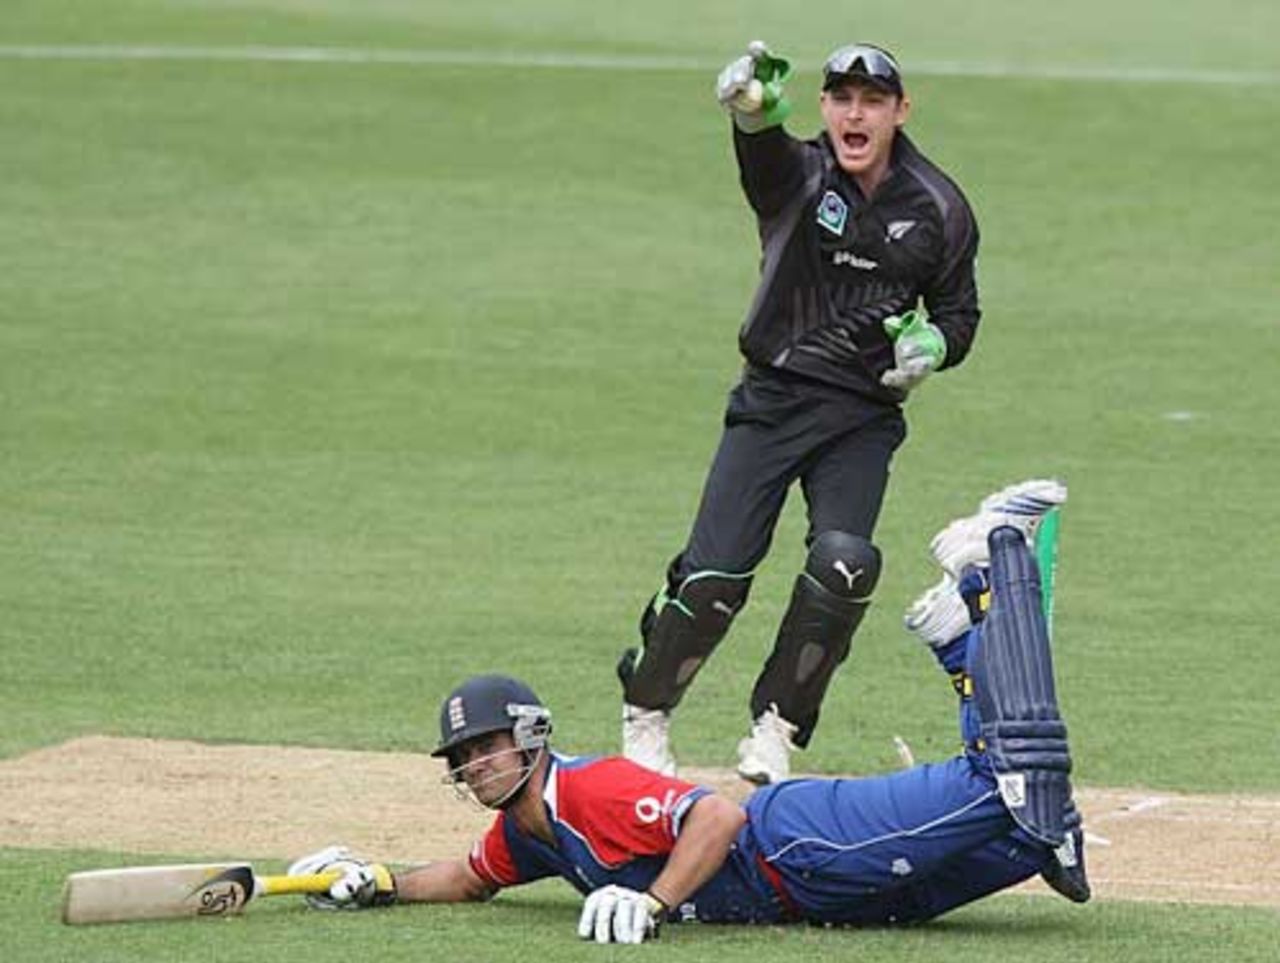 Owais Shah joins England's list of run outs, New Zealand v England, 1st ODI, Wellington, February 9, 2008